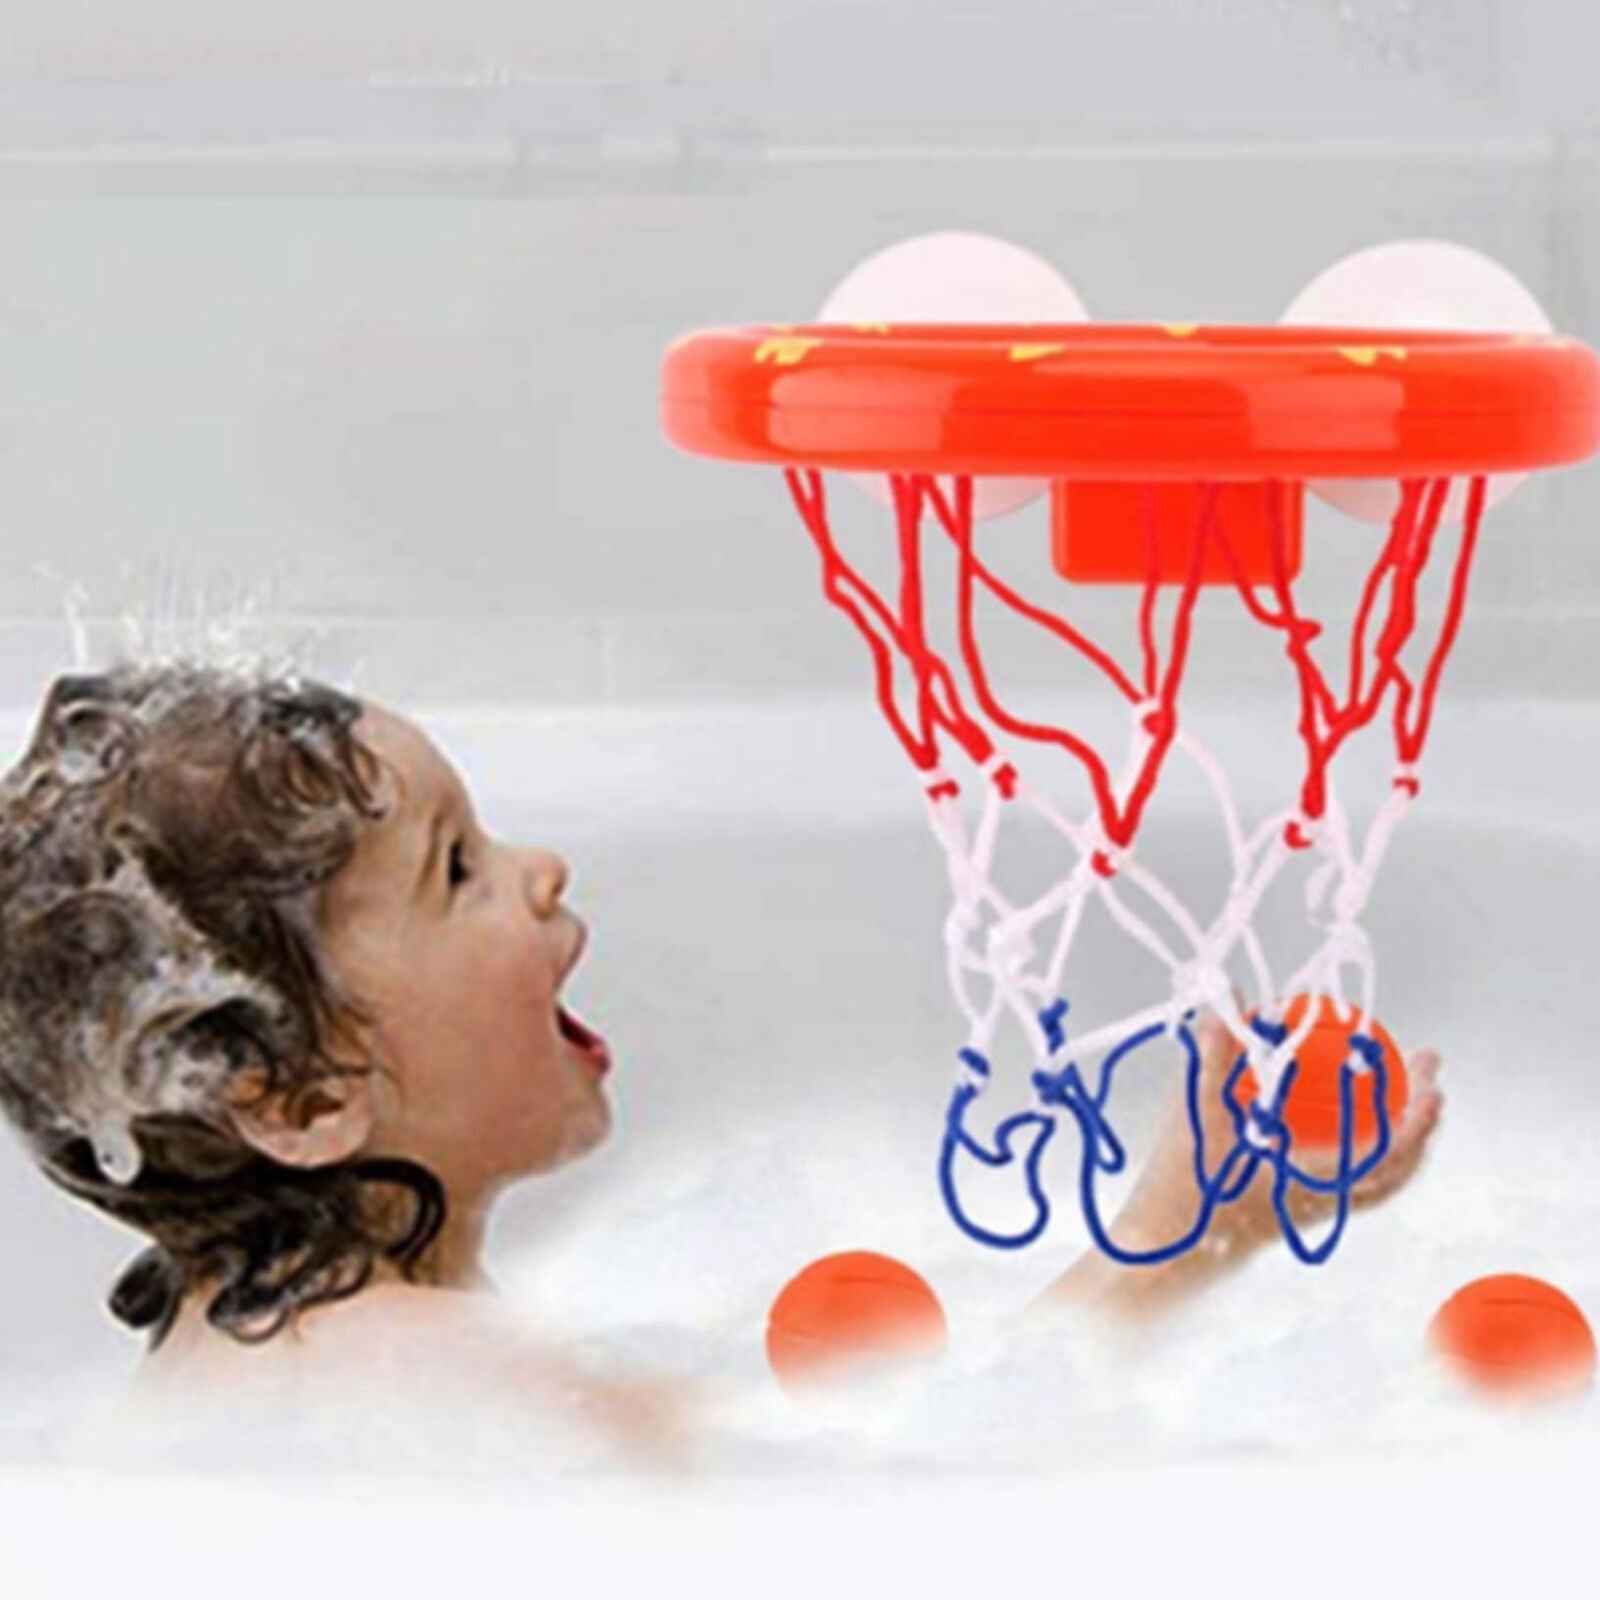 Kids Bath Toys Basketball Hoop & Ball Bathtub Water Play Set for Baby Girl Boy